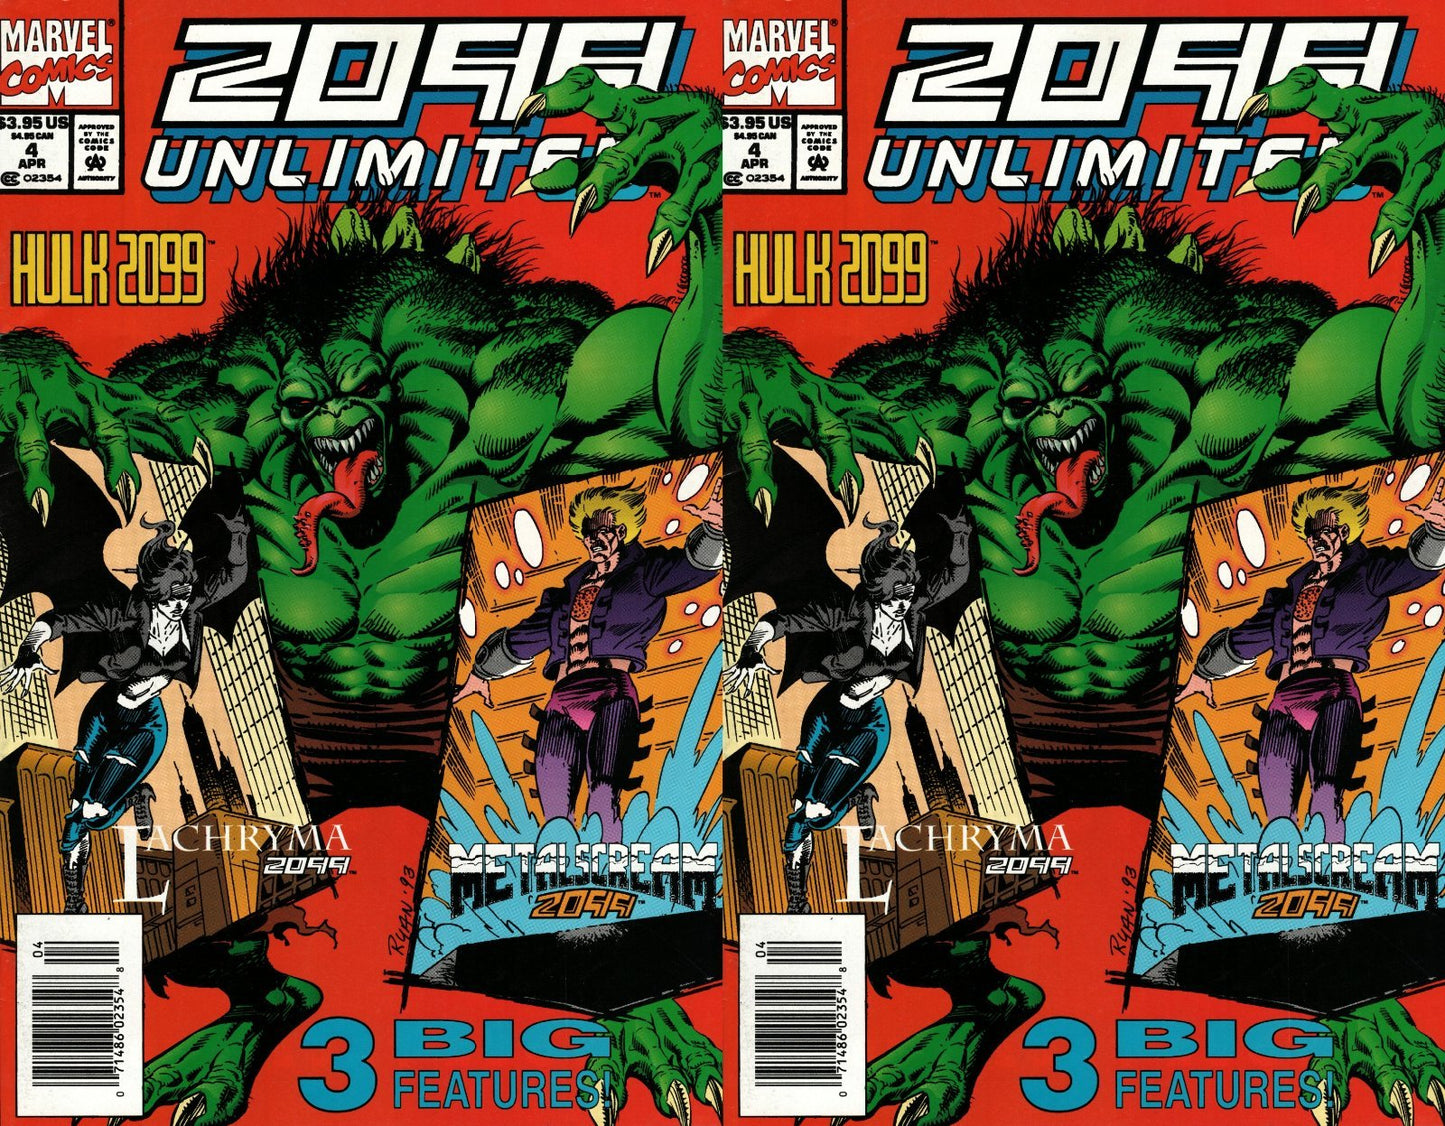 2099 Unlimited #4 Newsstand Covers (1993-1995) Marvel Comics - 2 Comics